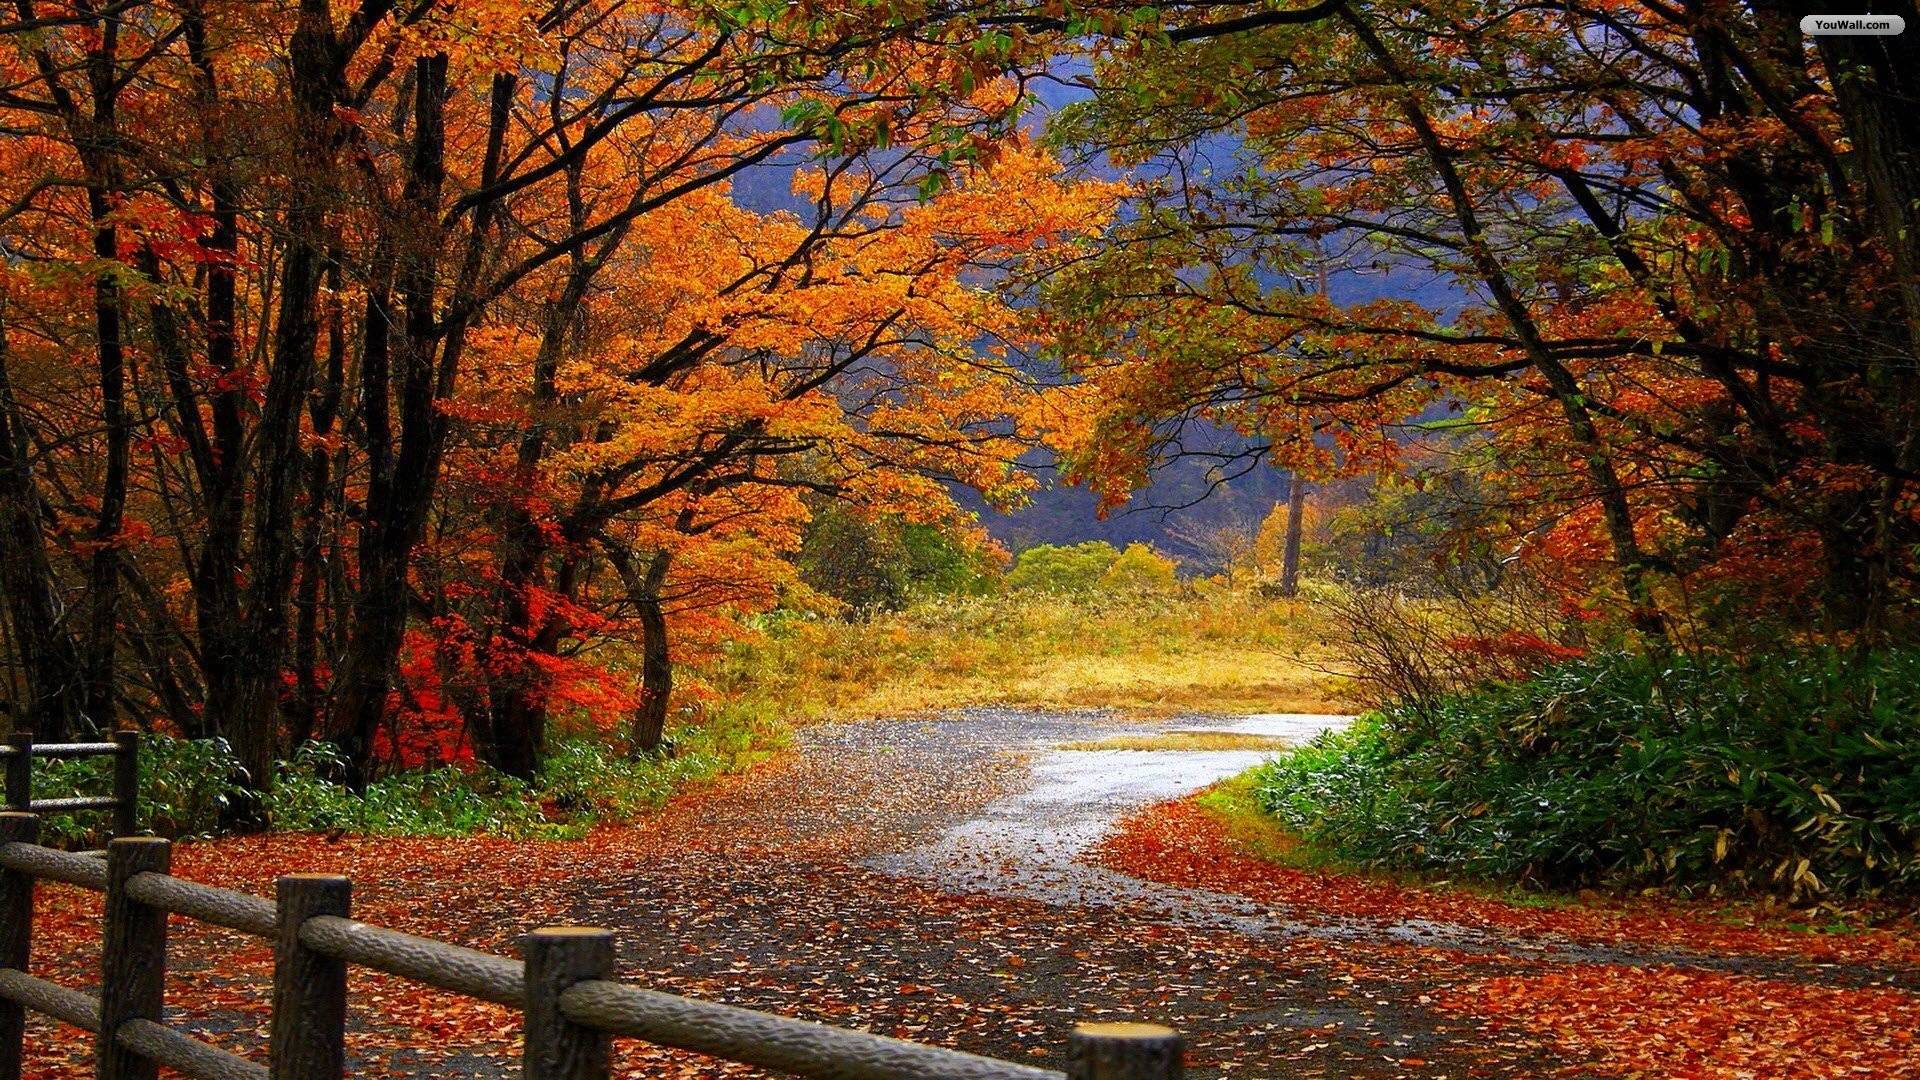 Autumn Scenery Wallpaper desktop picture